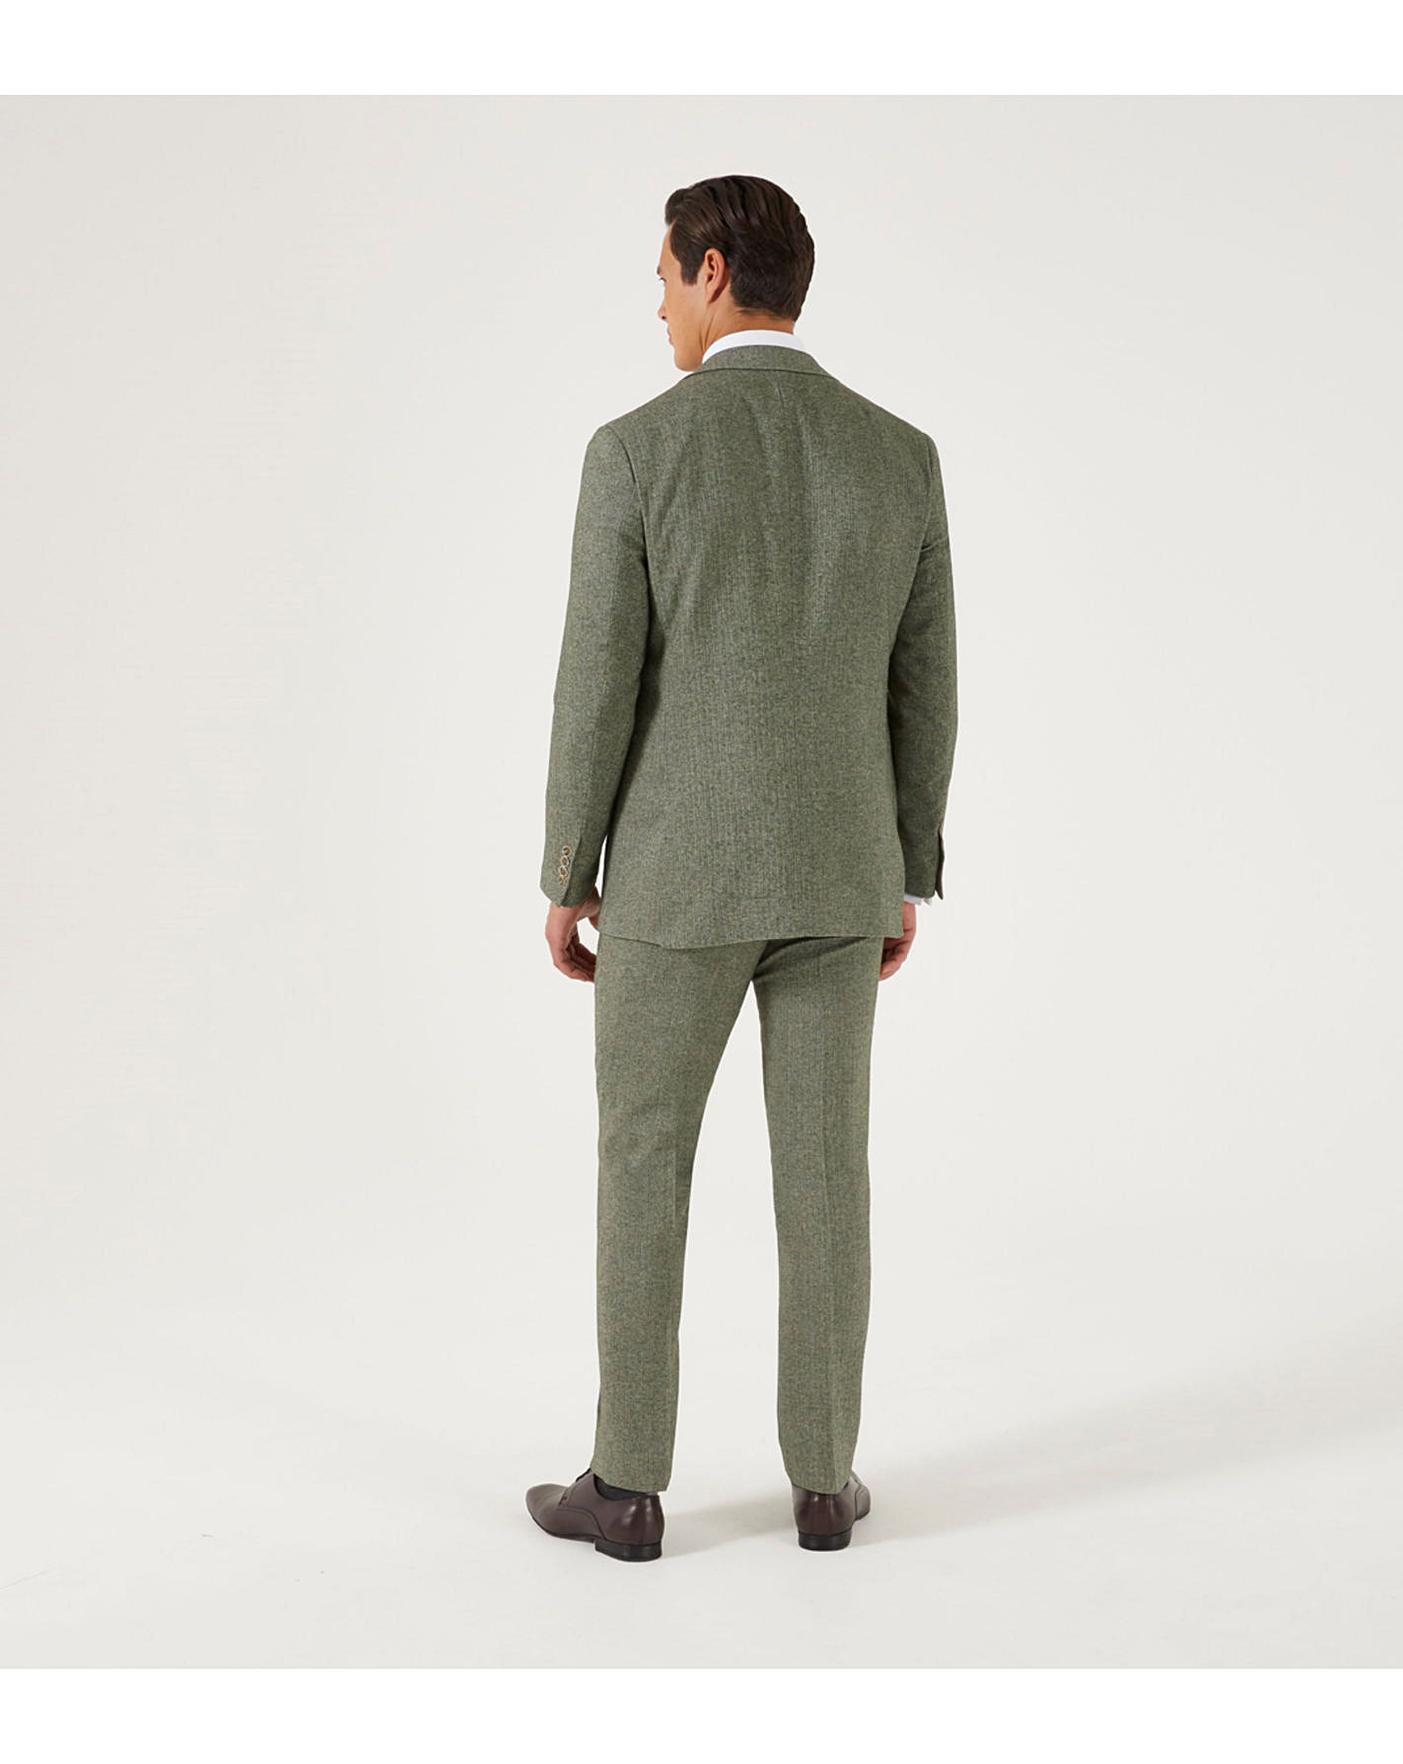 Moss London Sage Herringbone Suit